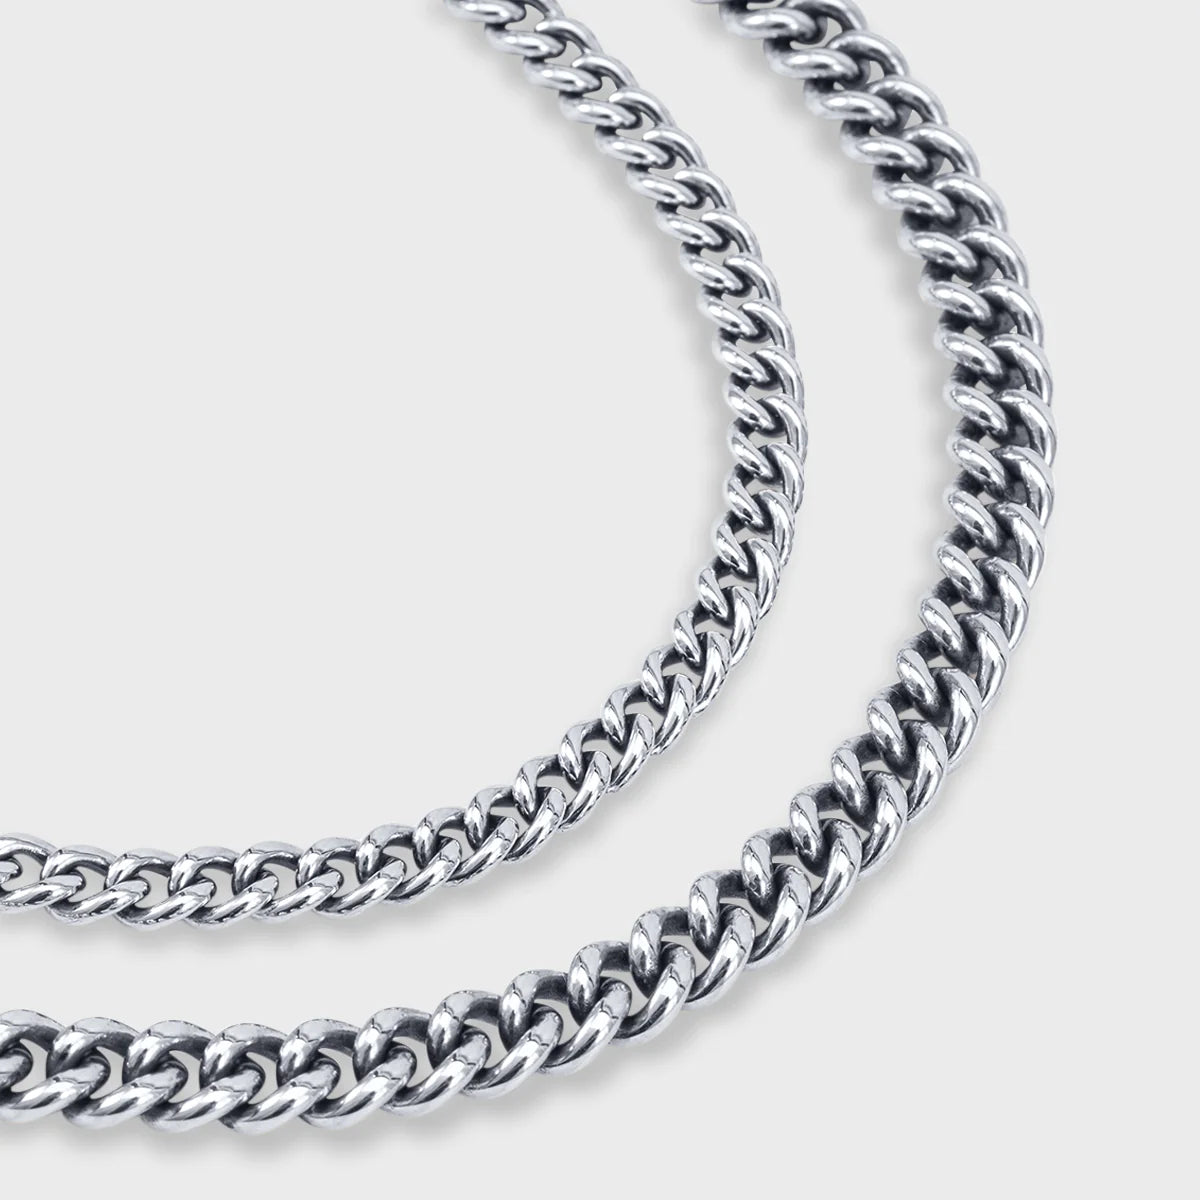 Good Art Curb Chain Necklace Chain